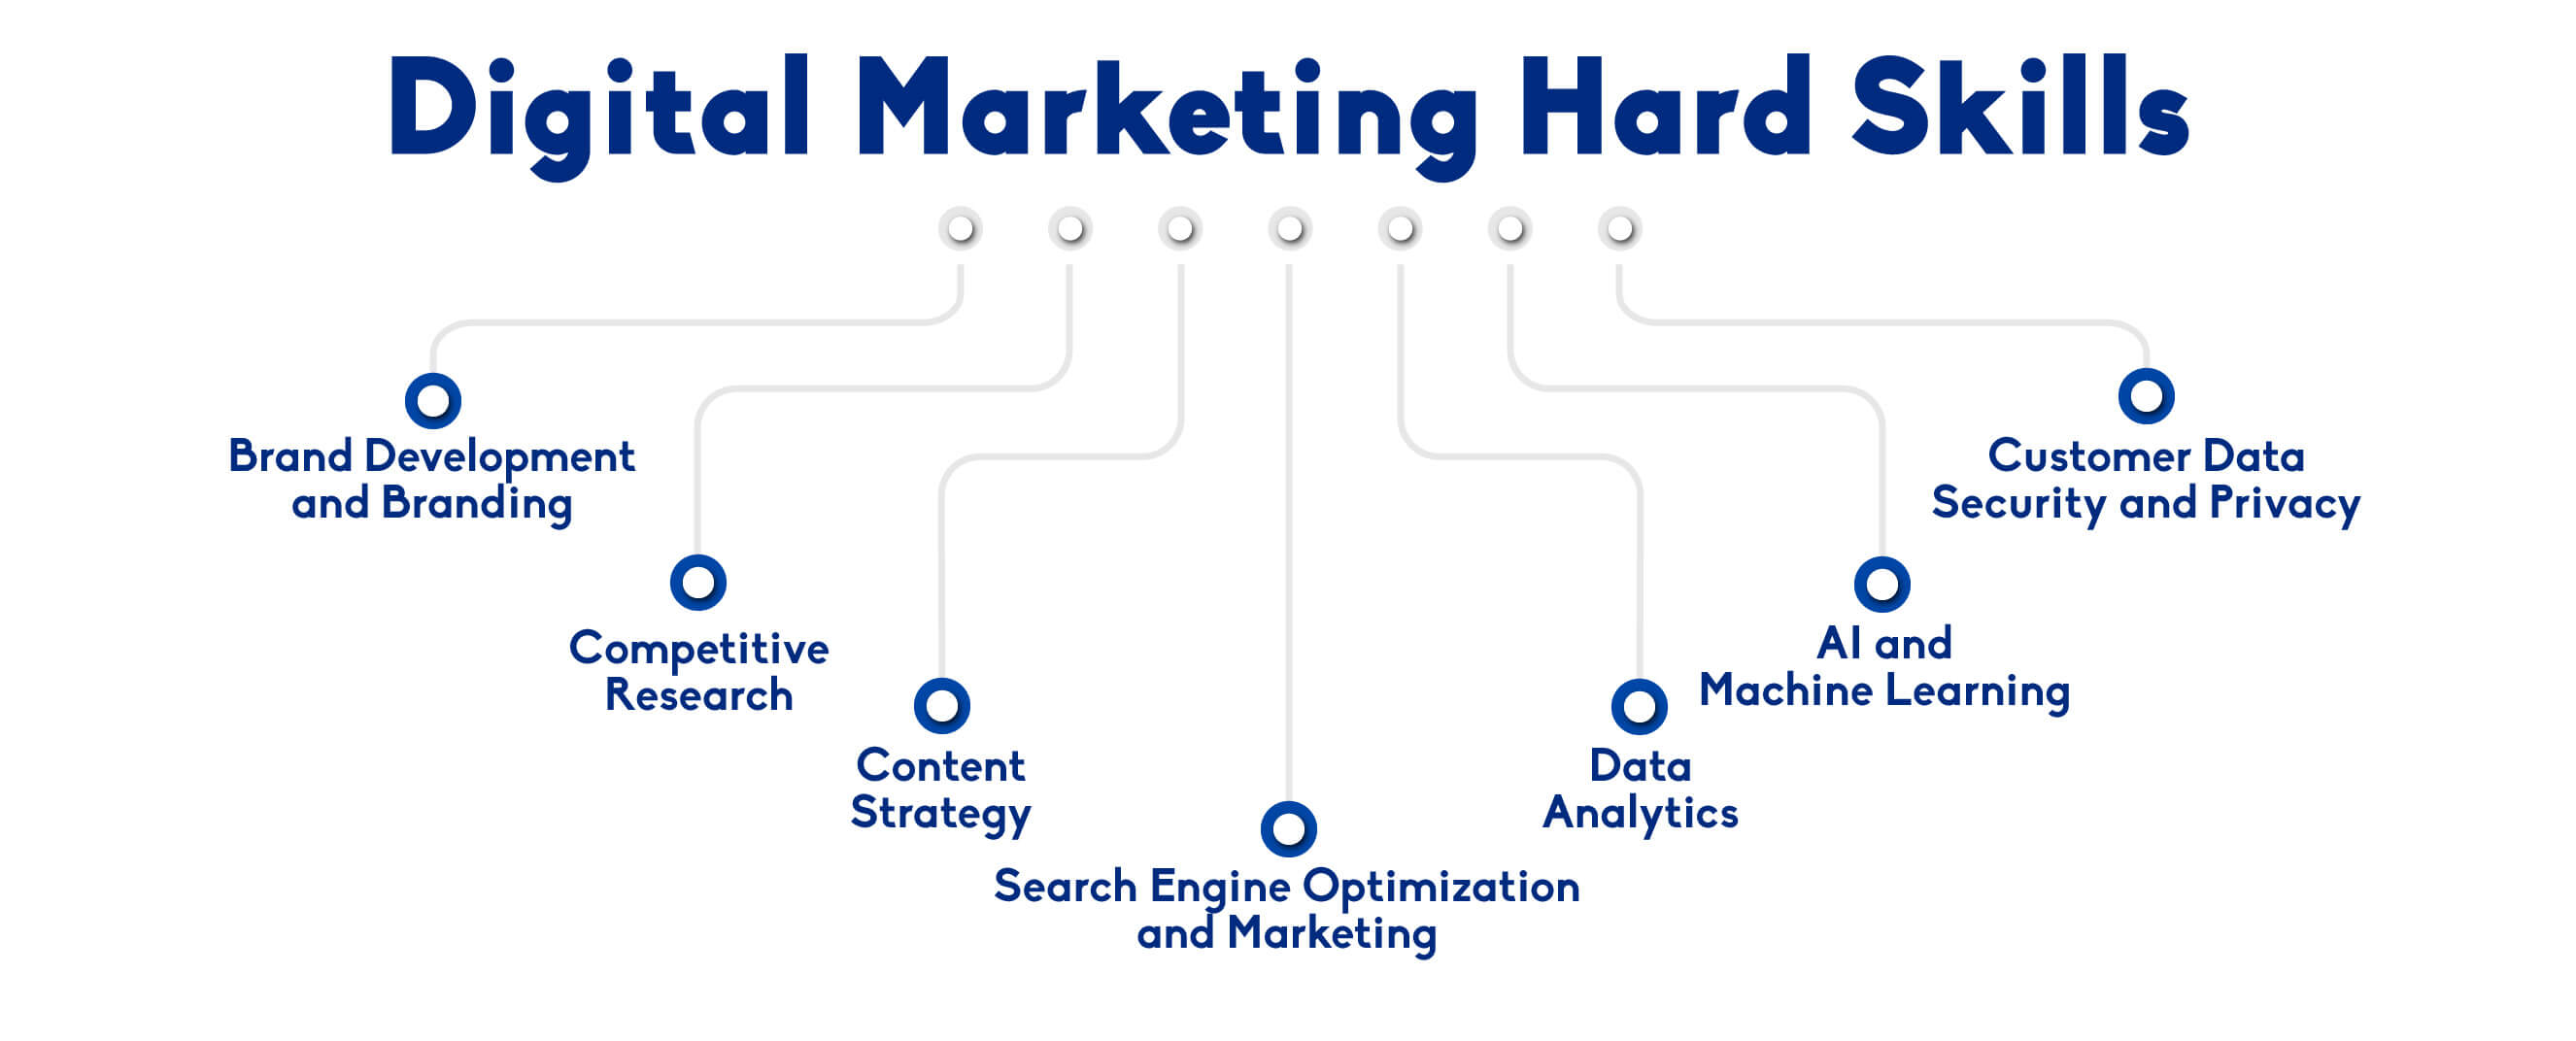 How Hard is Digital Marketing?